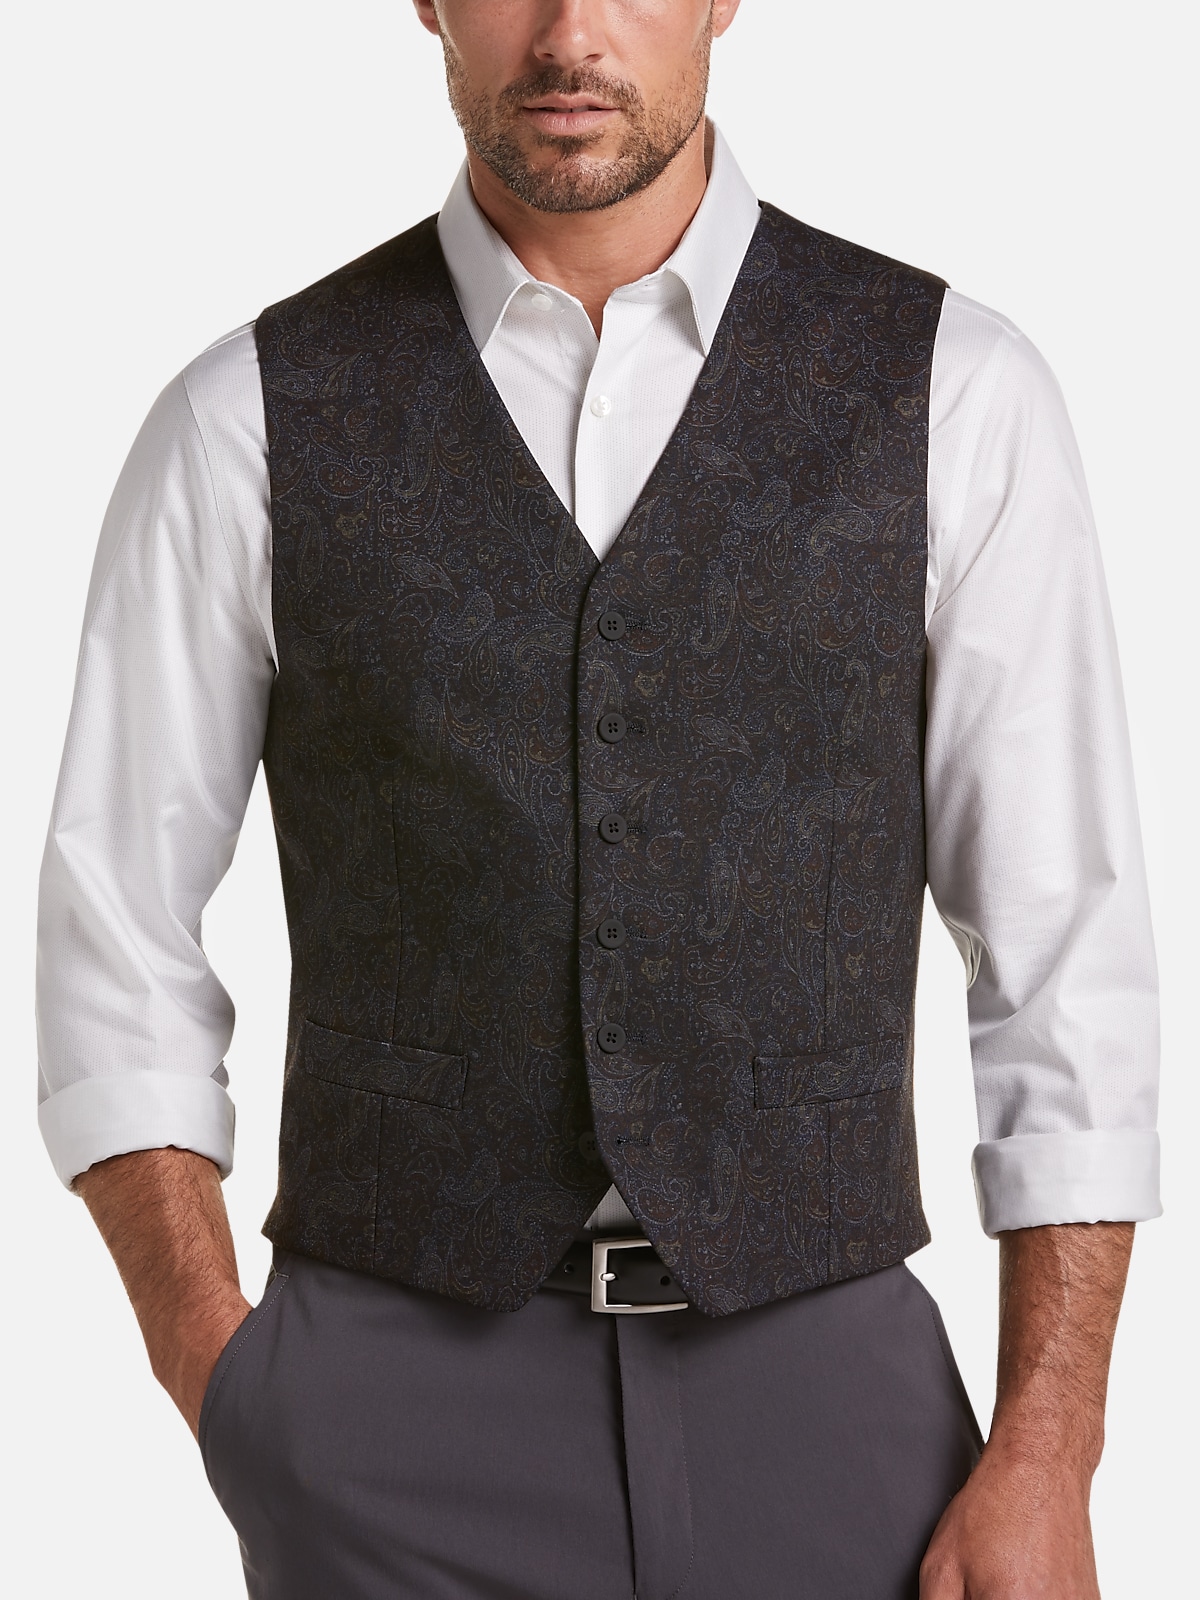 JOE Joseph Abboud Slim Fit Vest | All Sale| Men's Wearhouse